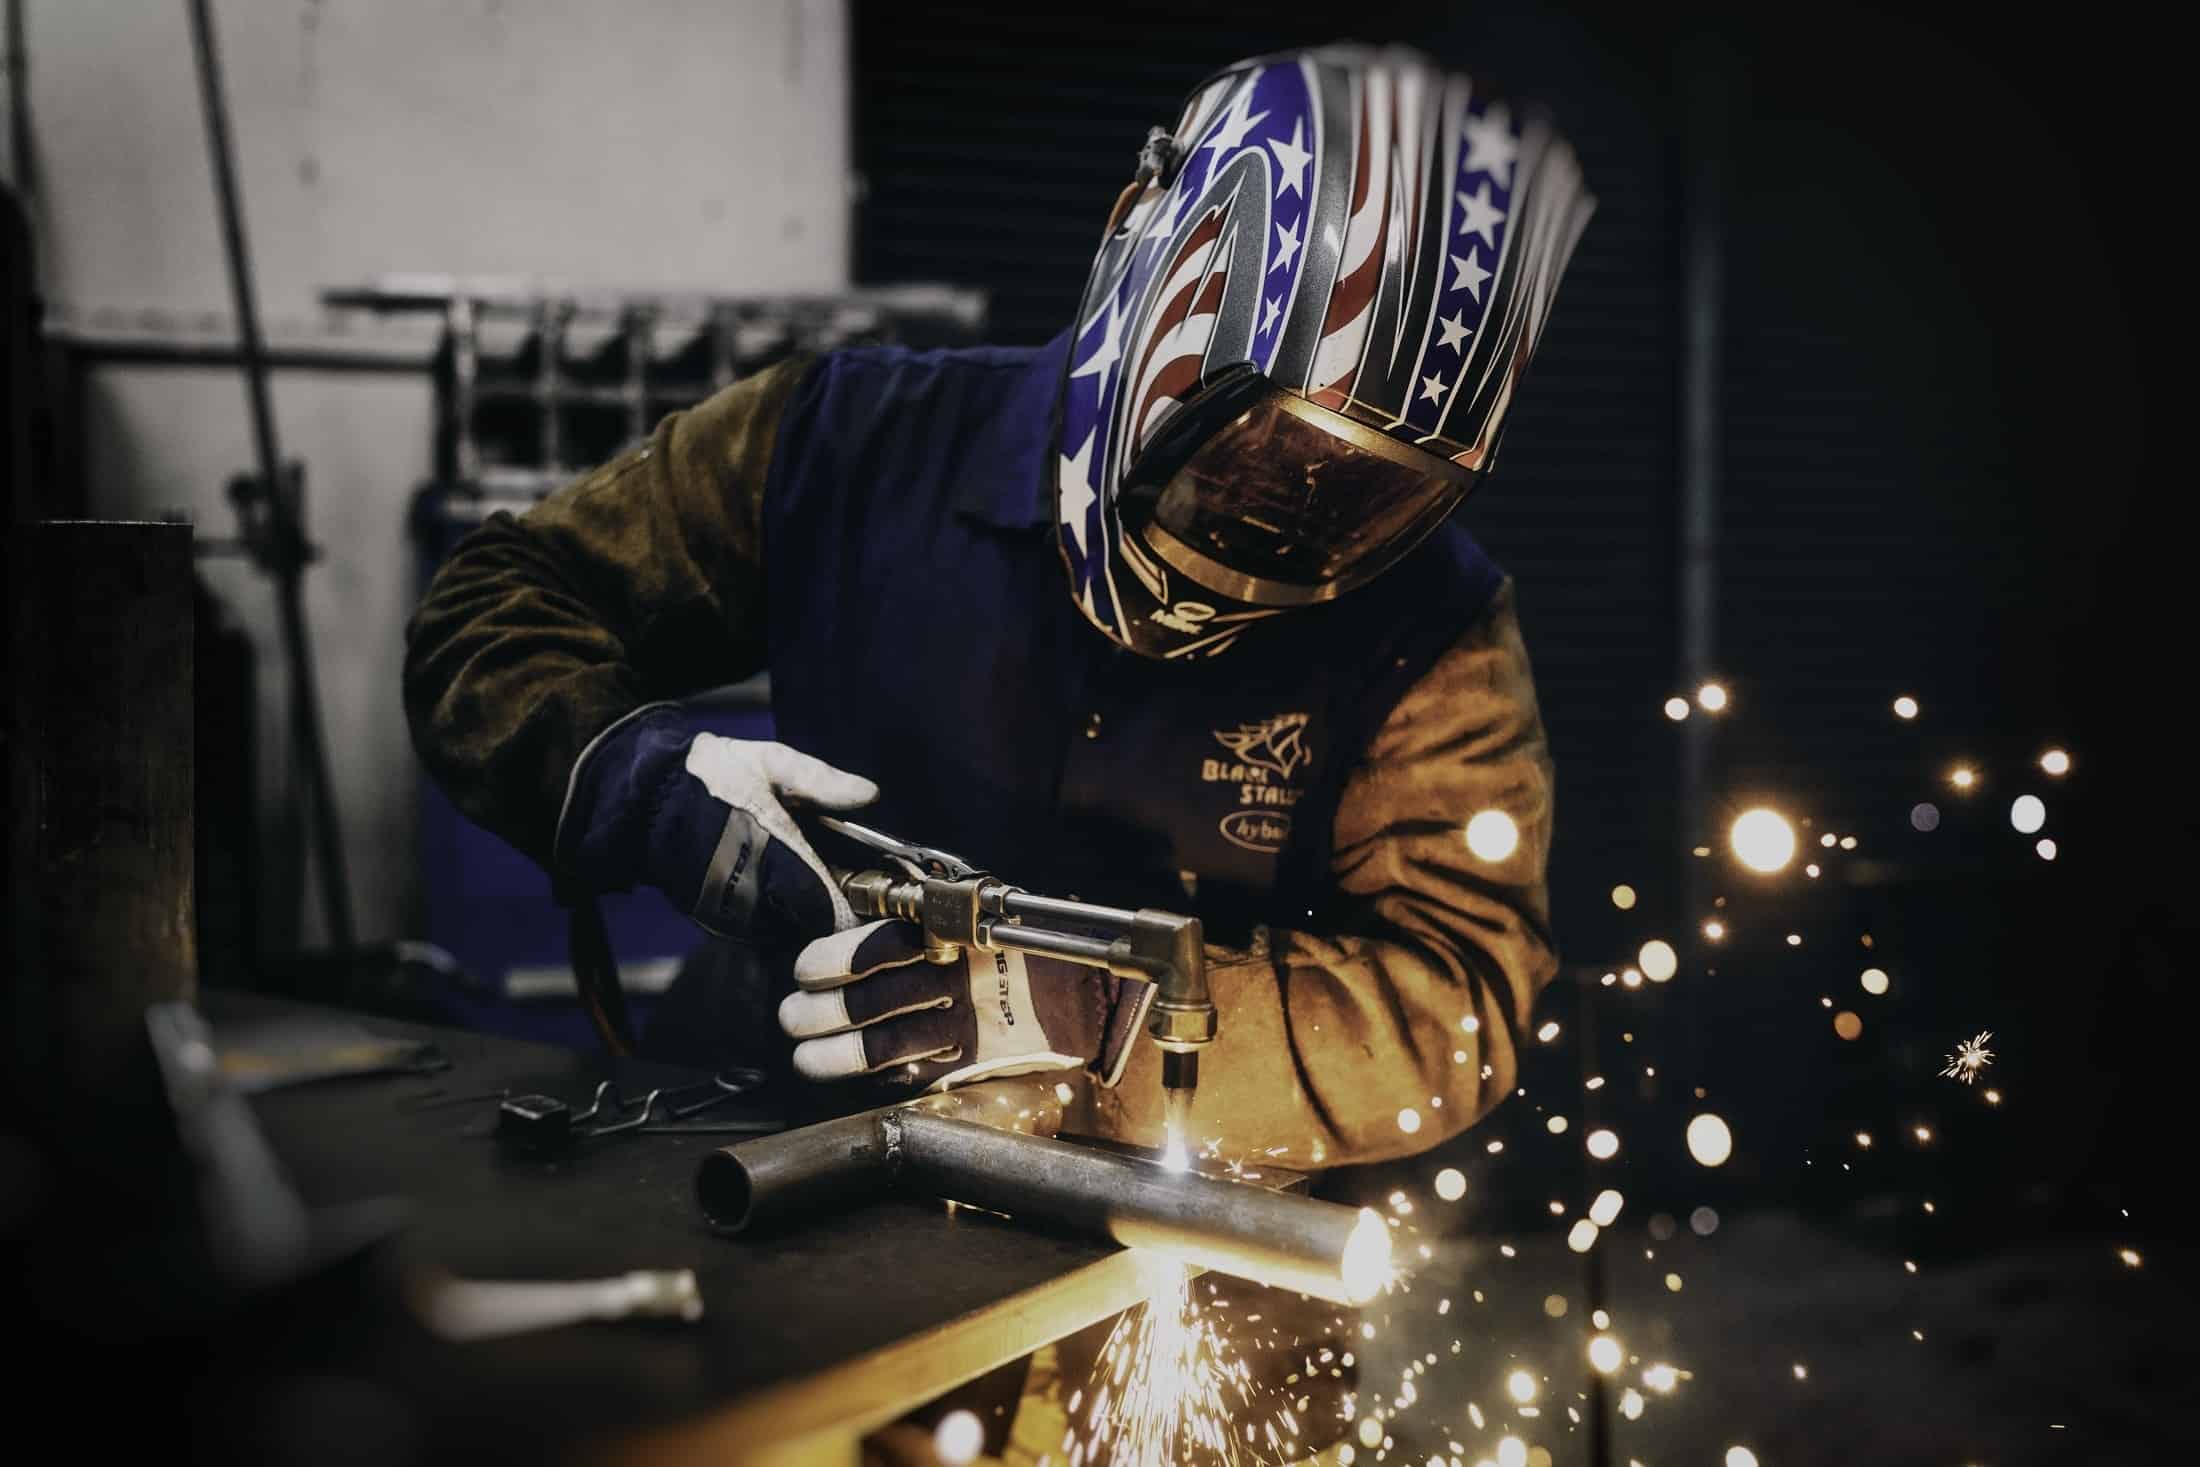 a welder working on metals